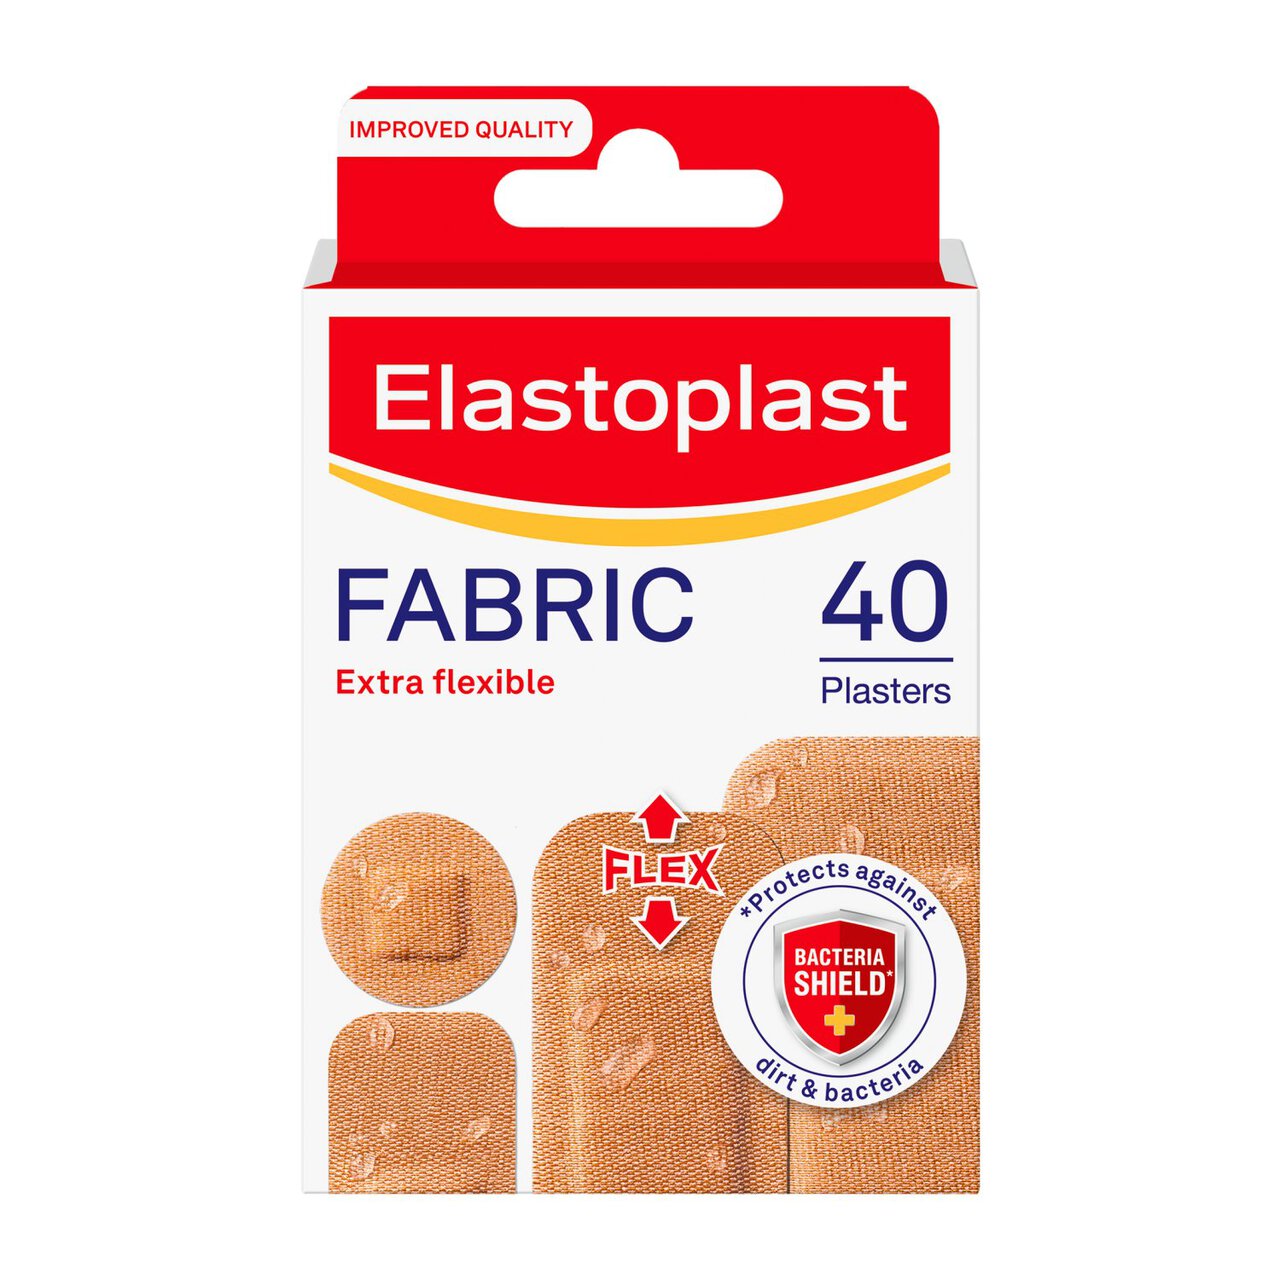 Elastoplast Fabric Plasters Extra Flexible & Breathable 40s 40 per pack